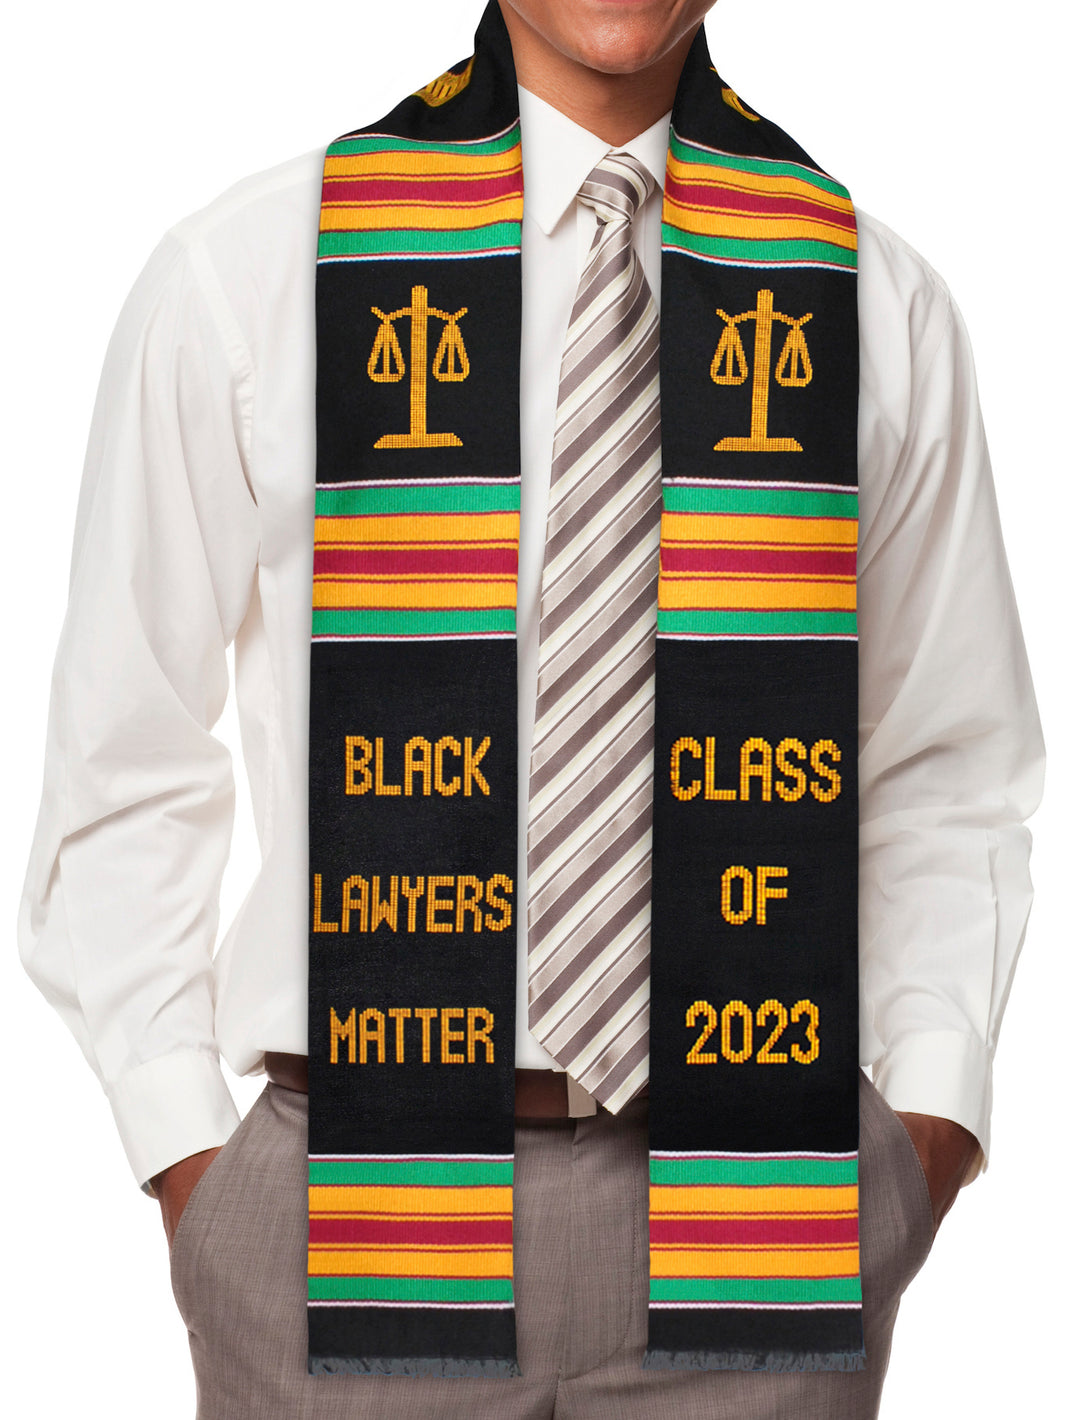 black lawyers matter class of 2023